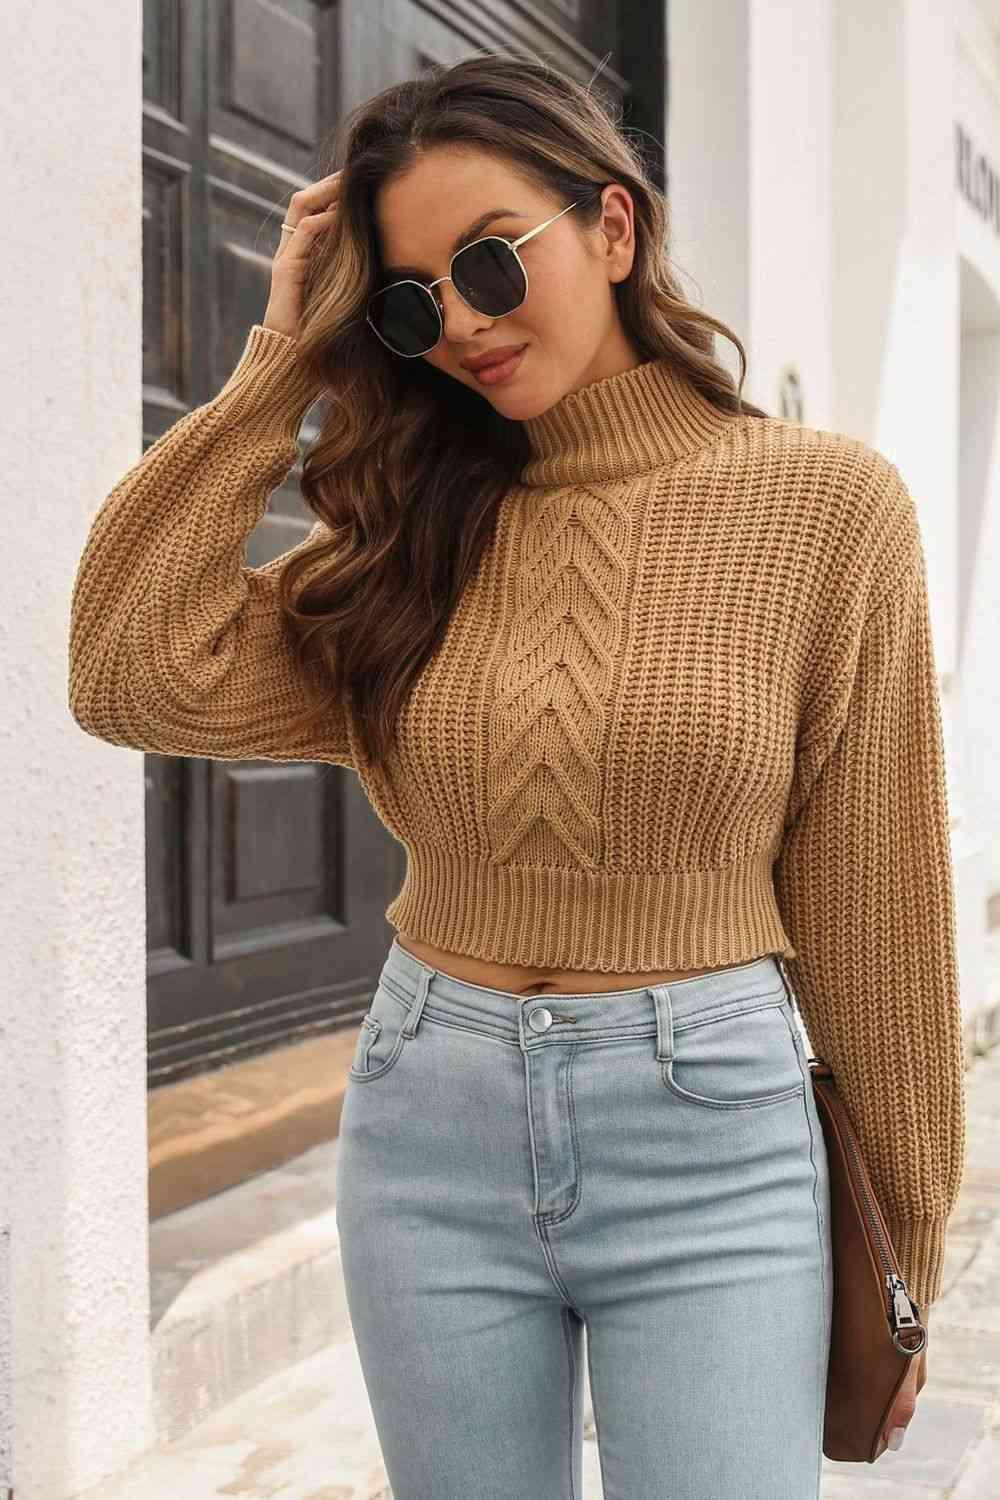 Bona Fide Fashion - Cropped Mock Neck Cable-Knit Pullover Sweater - Women Fashion - Bona Fide Fashion